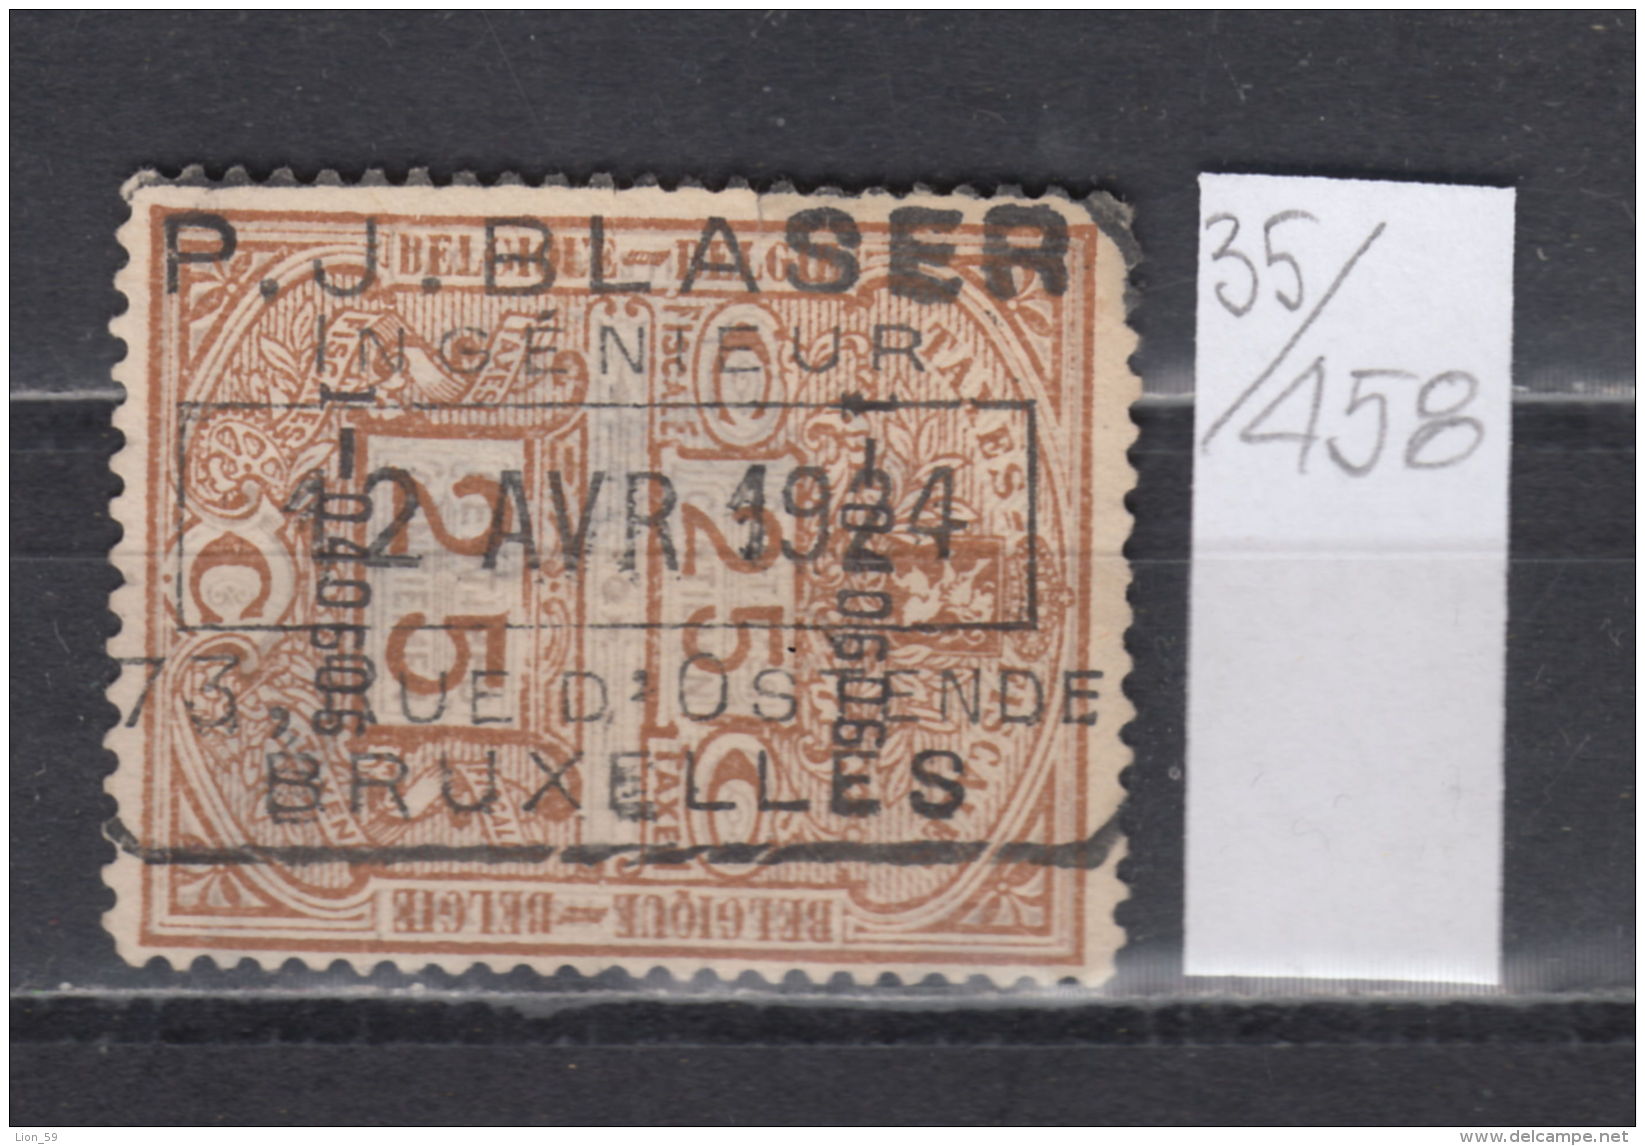 35K458 / 1924 - 25 C. TAXES FISCALES , RAILWAY P.J. BLASER - BRUXELLES , Revenue Fiscaux Steuermarken , Belgique Belgium - Marken